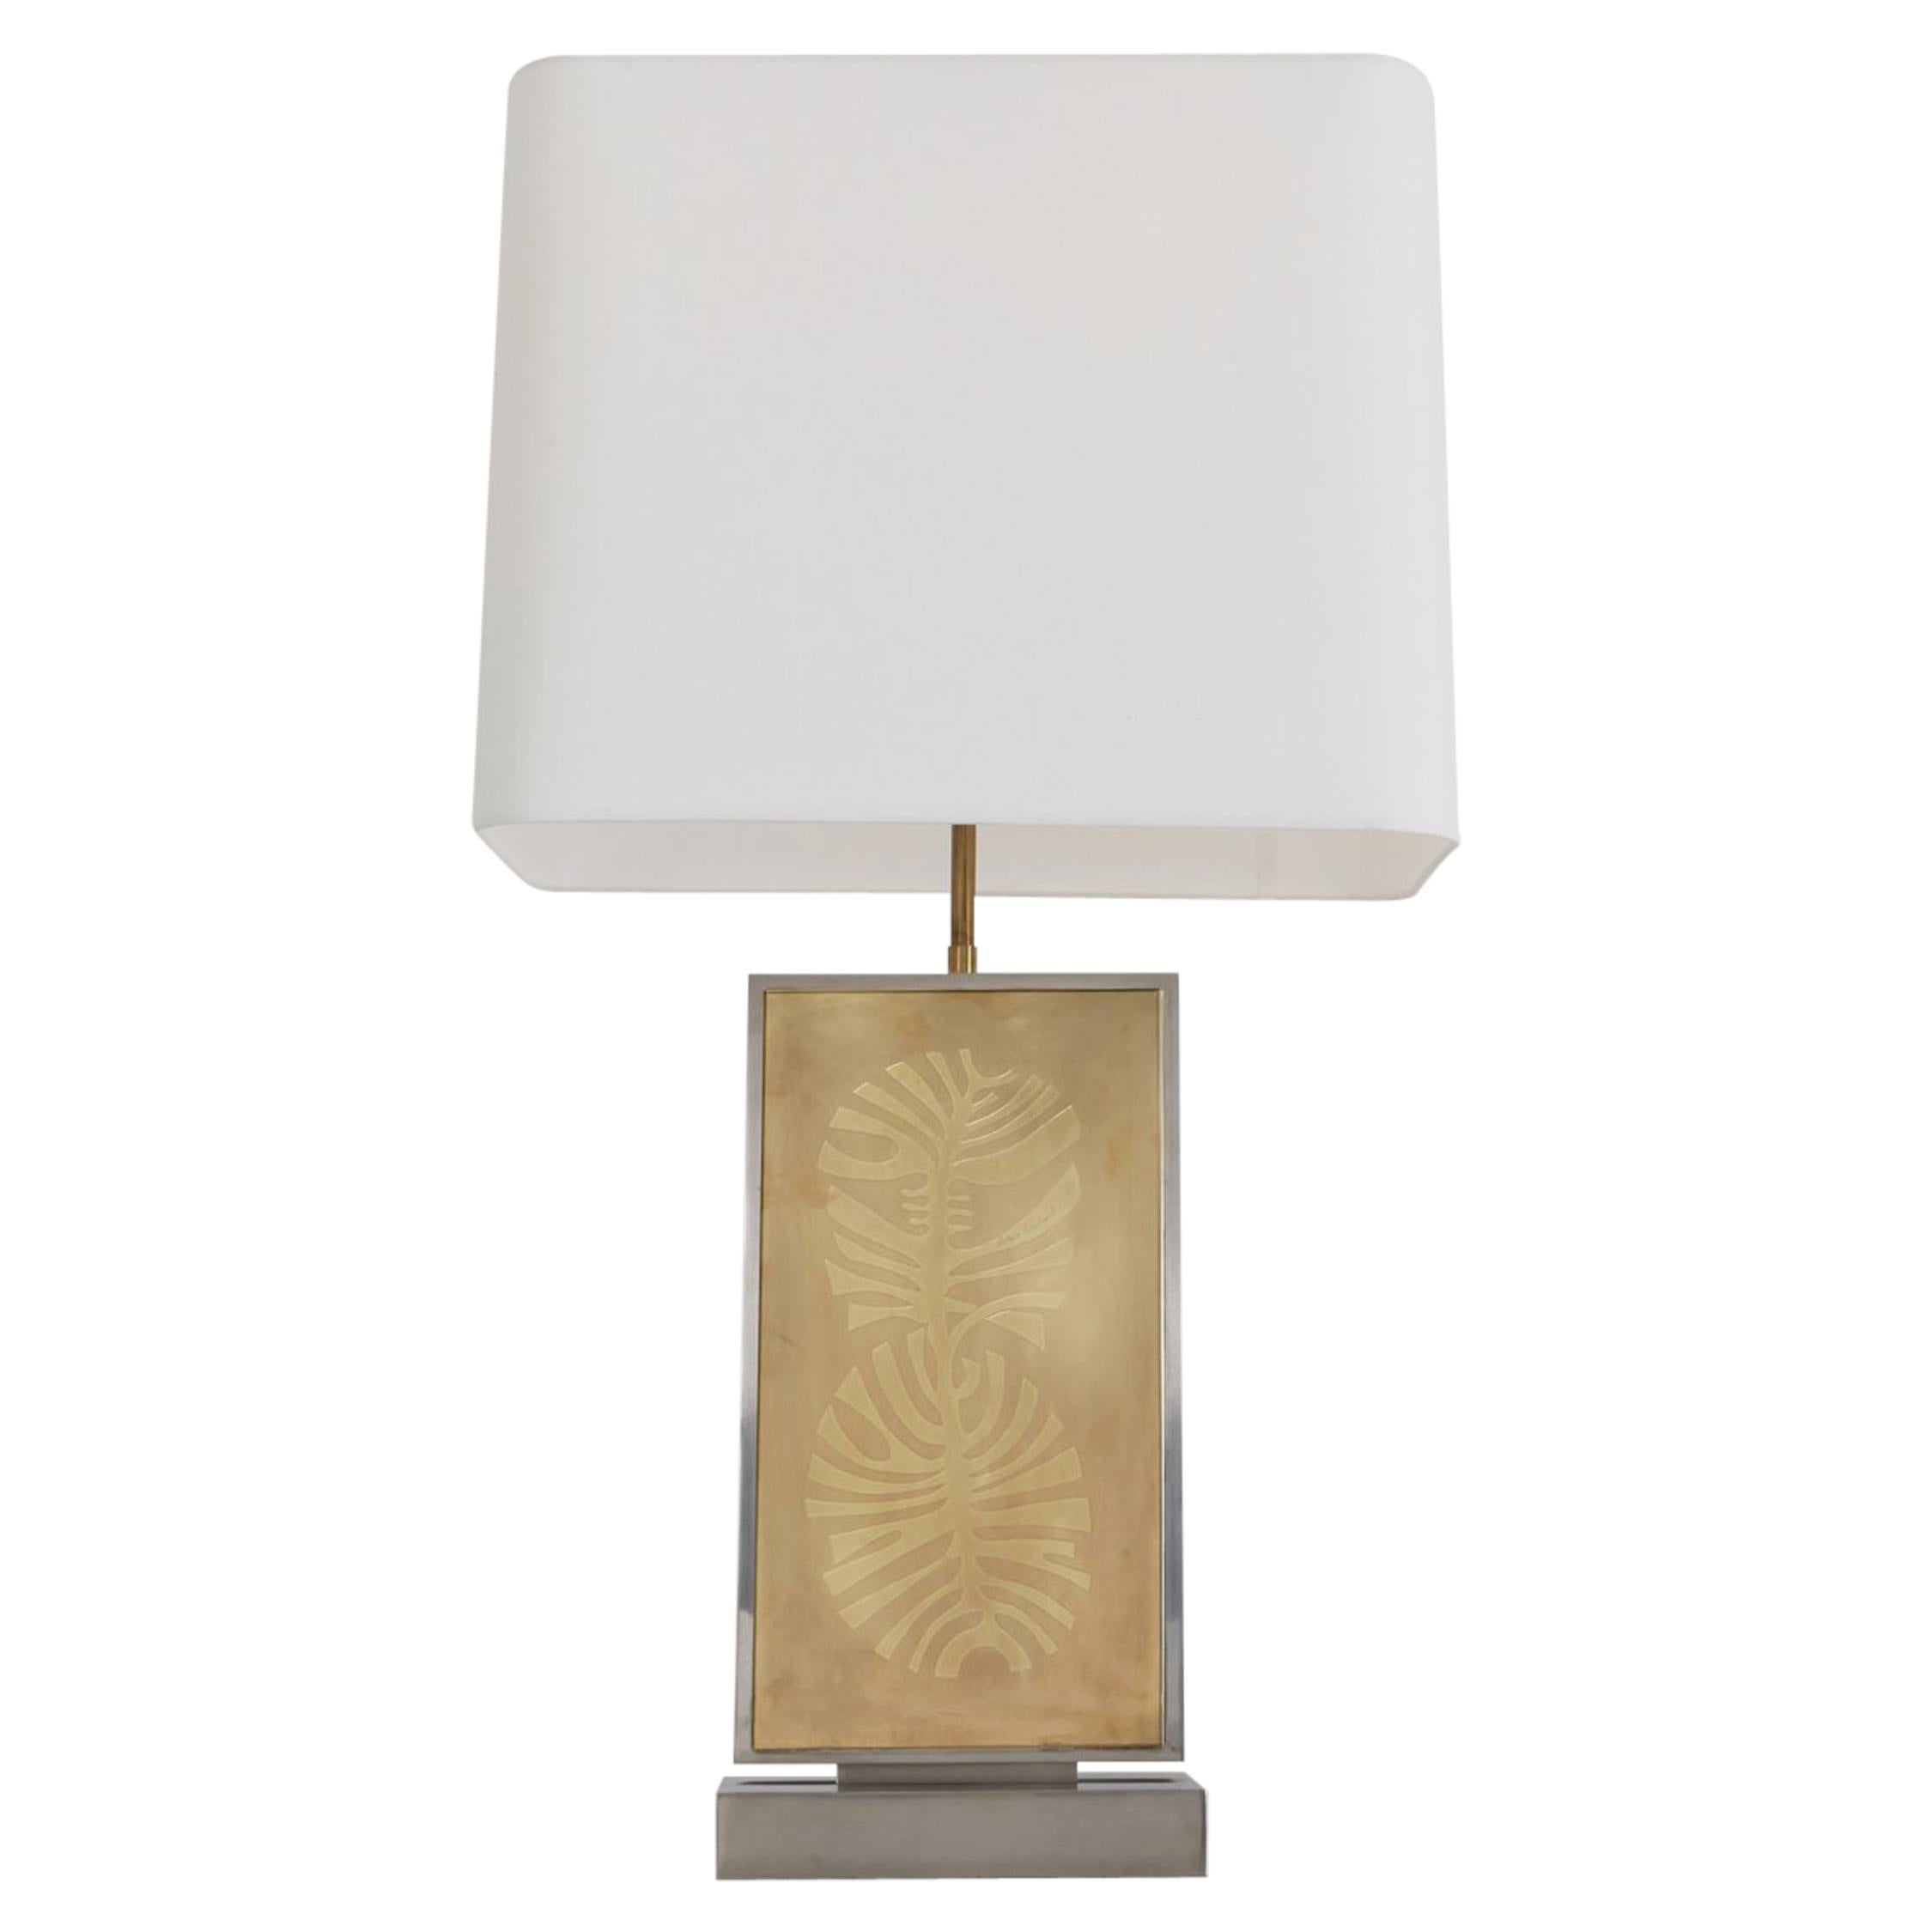 Roger Vanhevel Brass Etched Impressive Table Lamp For Sale